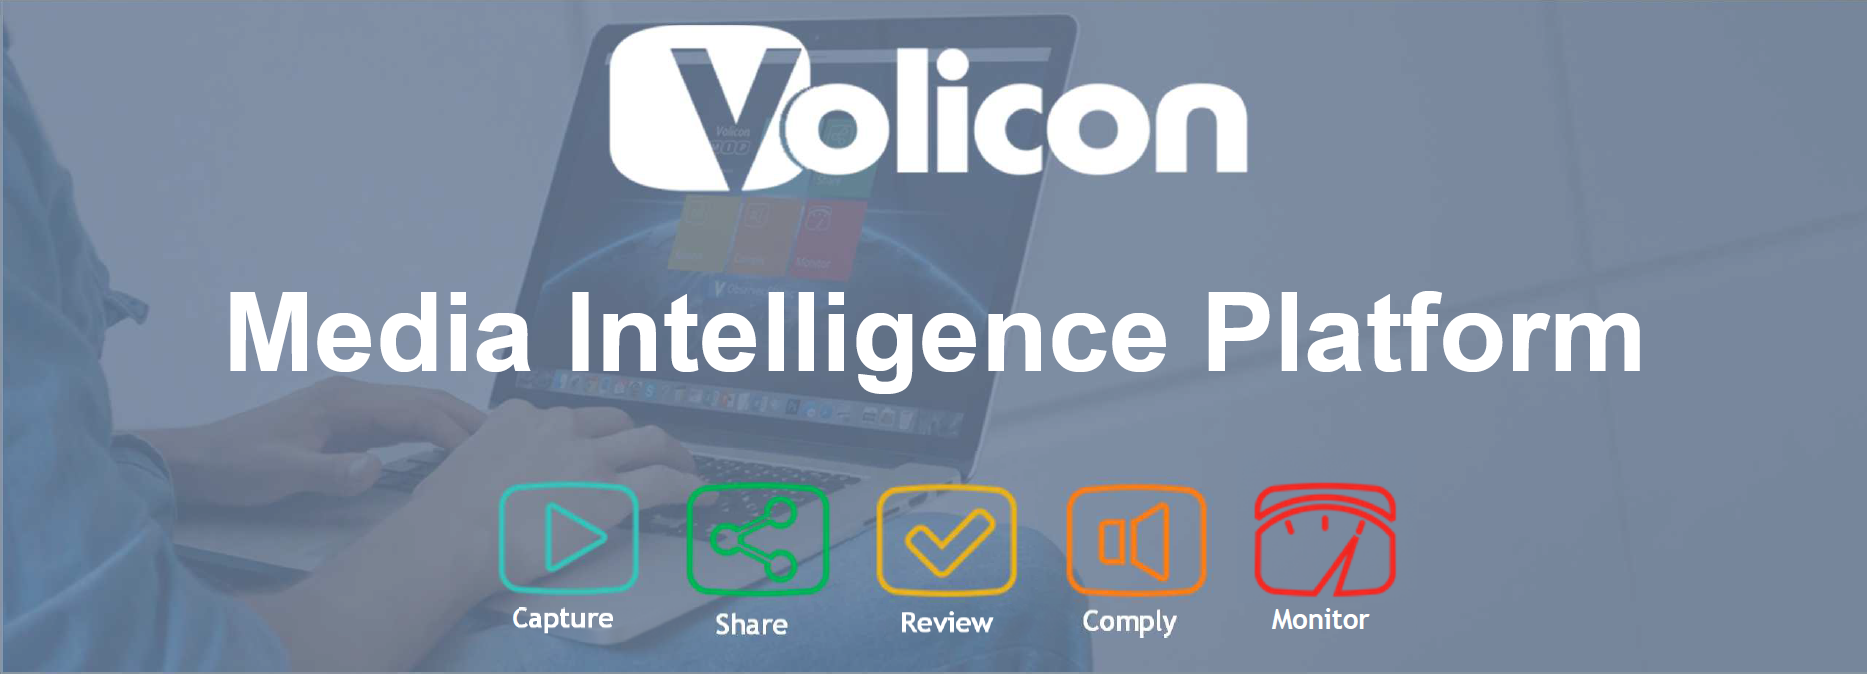 Volicon Media Intelligence Platform